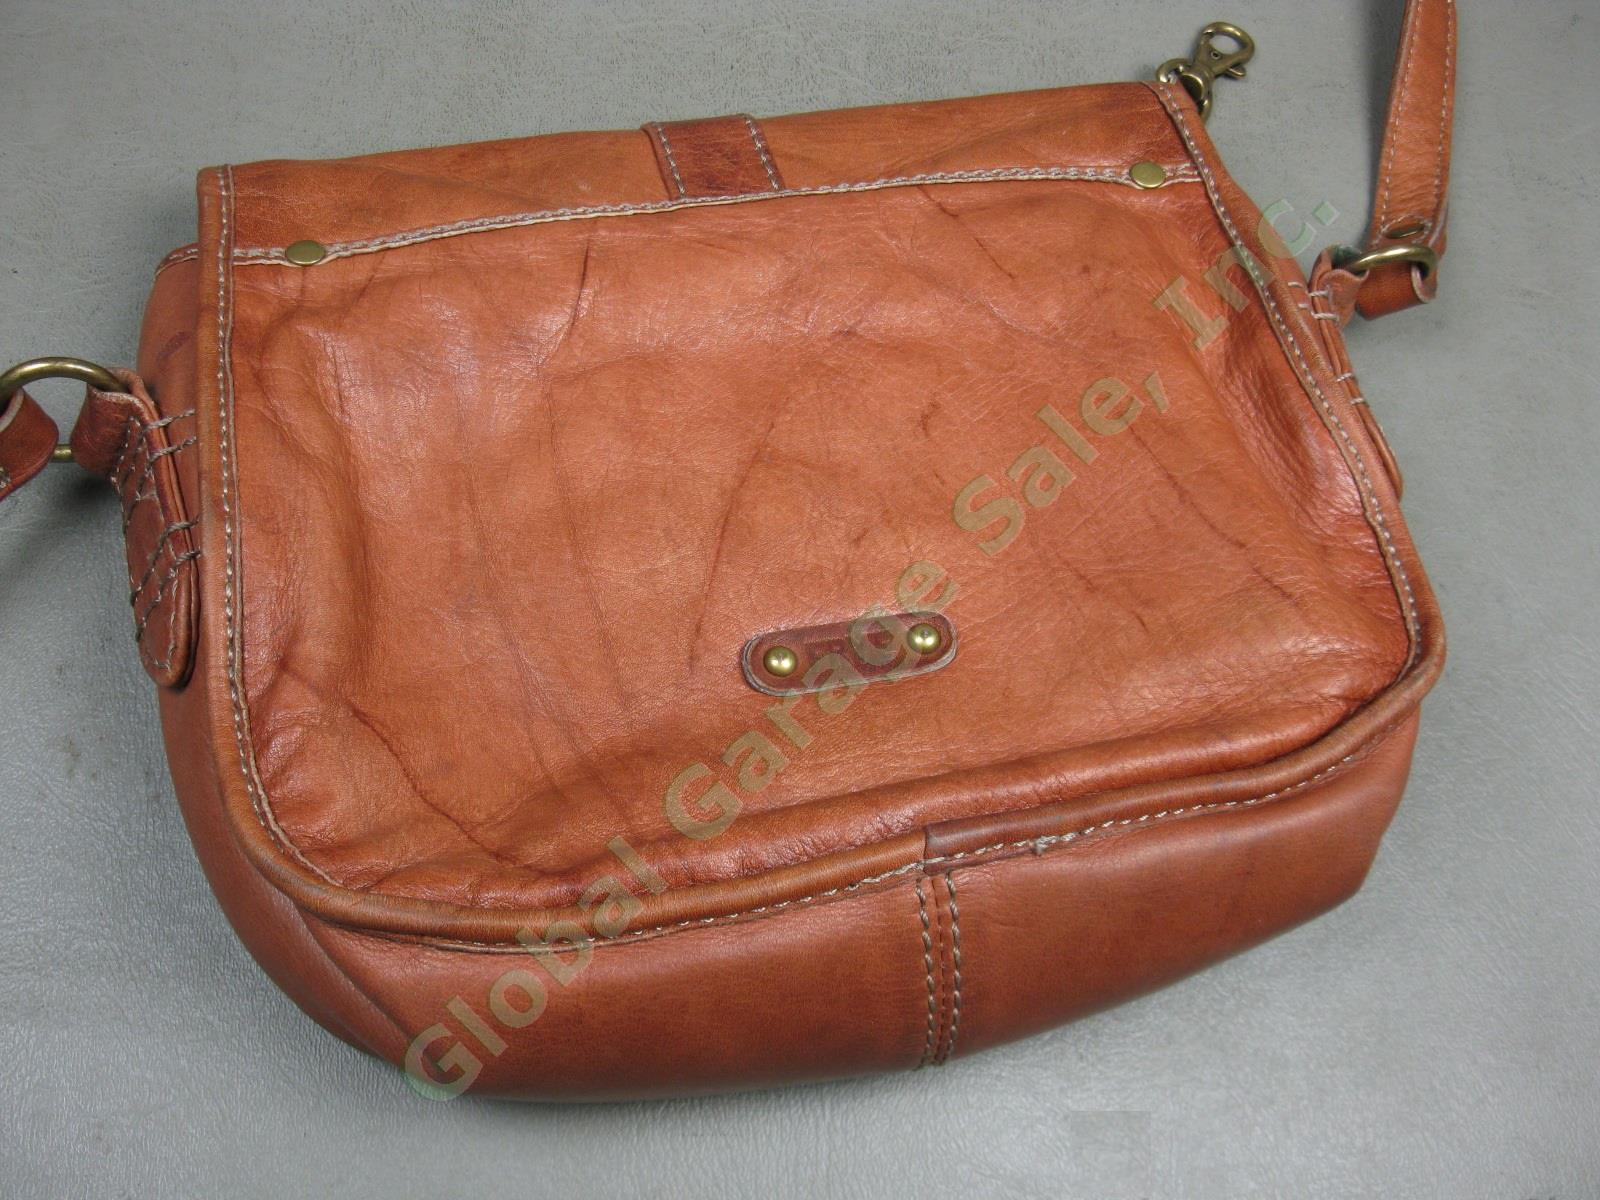 Frye Campus Saddle Cross Body Leather Handbag Clutch DB891 $298 Retail NORESERVE 2